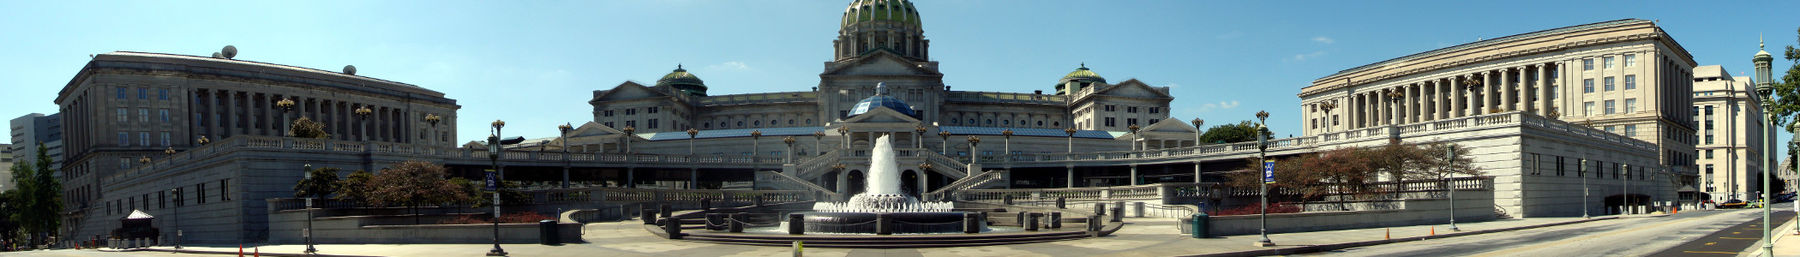 Pennsylvania Capitol banner.jpg